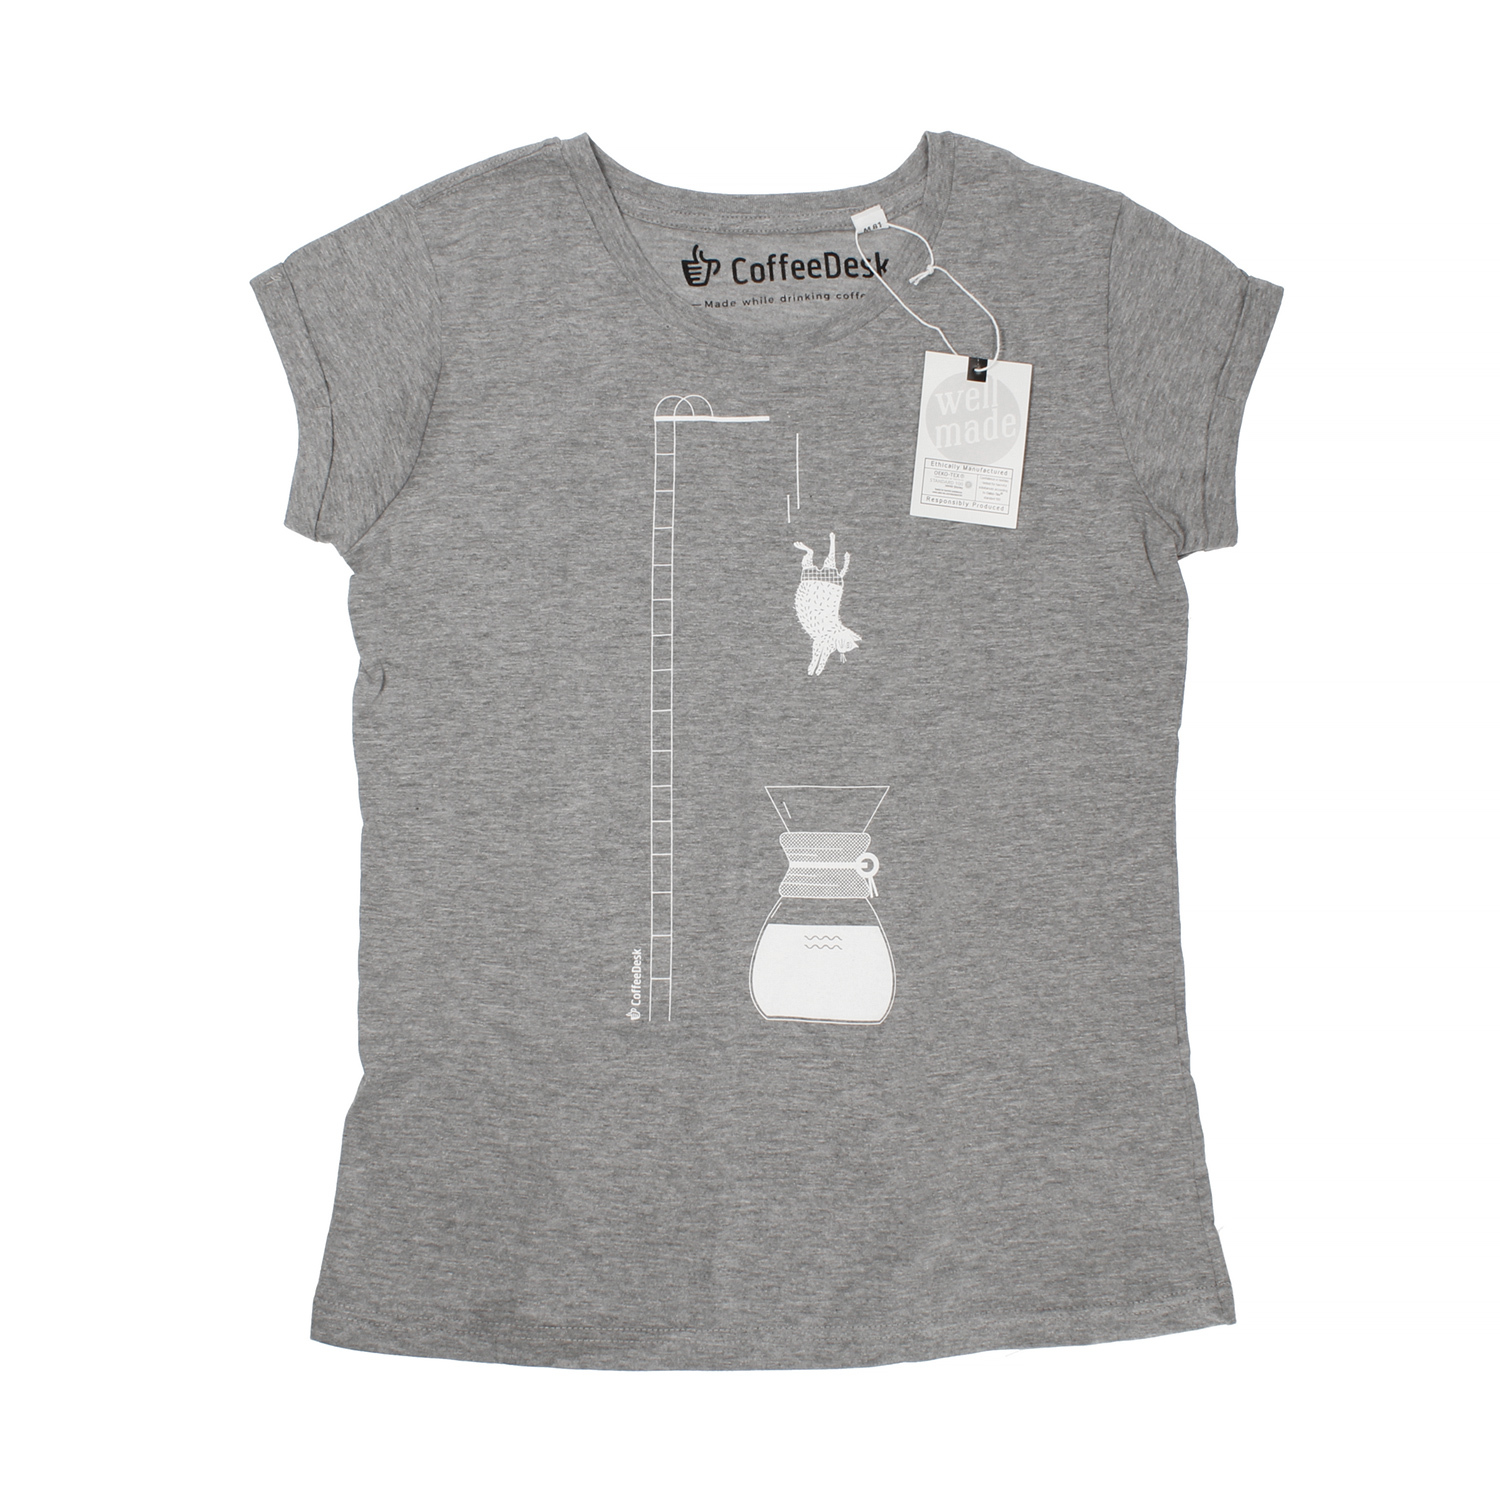 Coffeedesk Chemex Women's Grey T-shirt - L